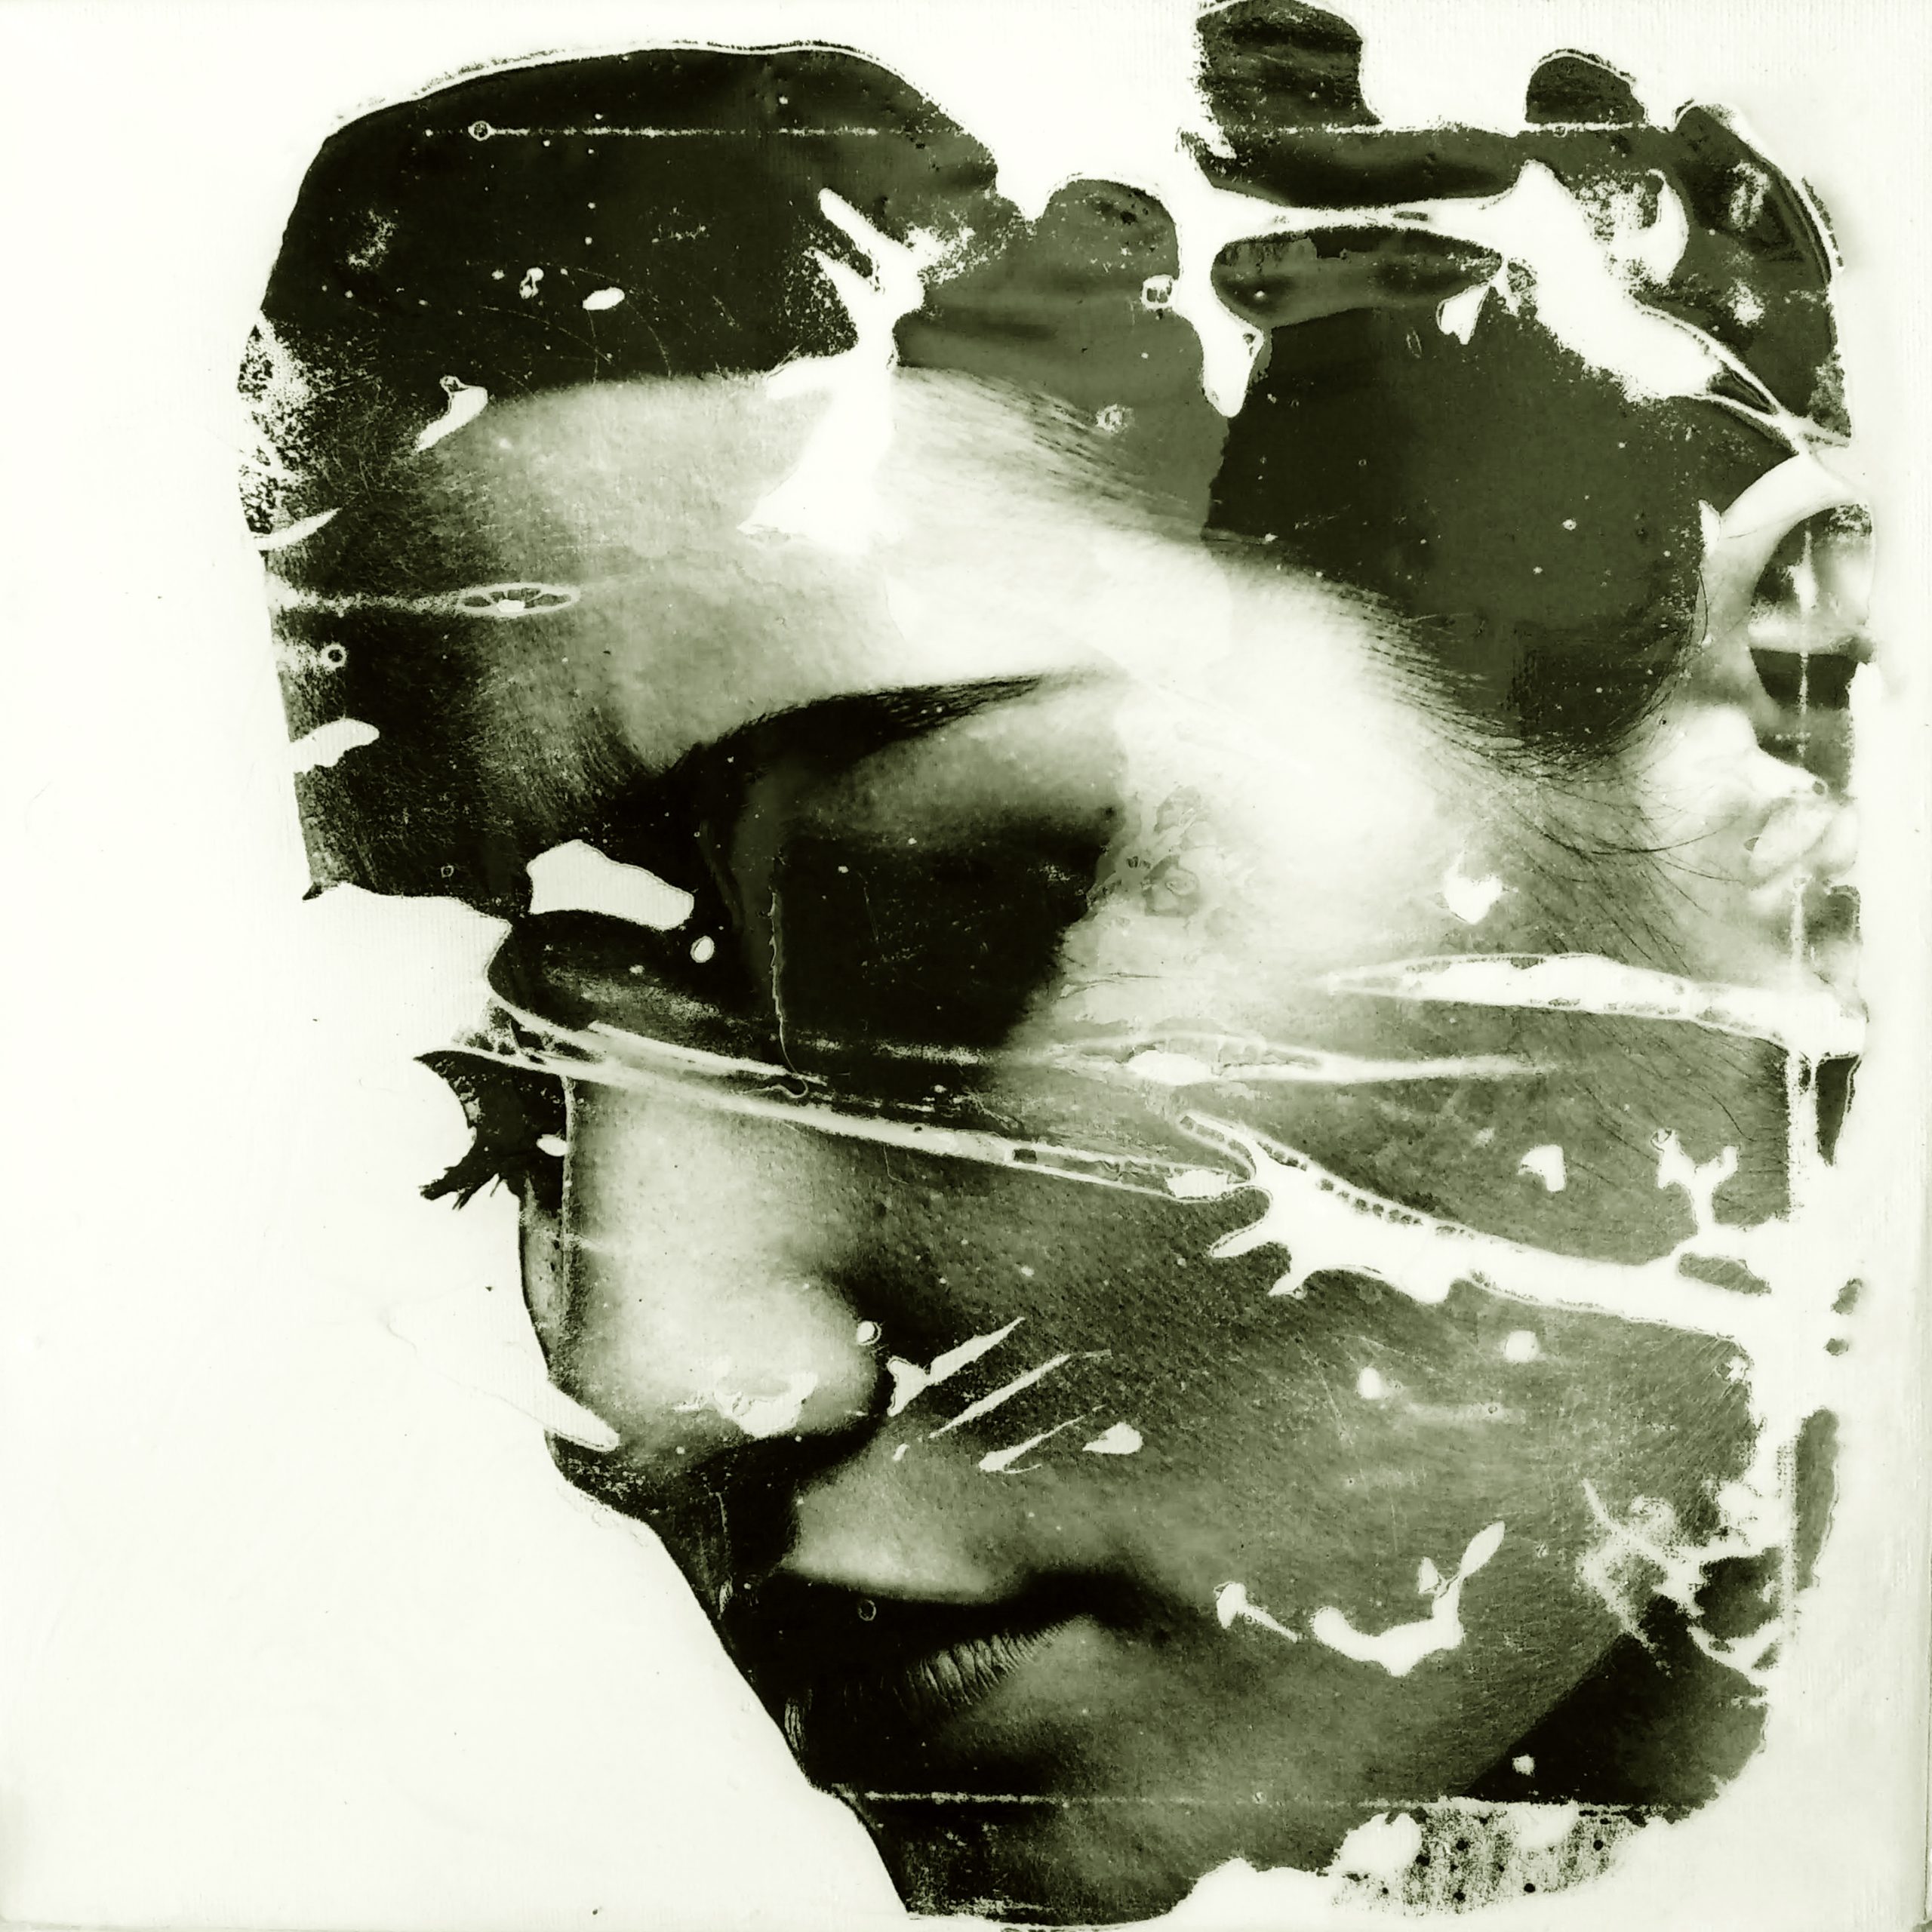 Raúl Lara image transfer and resin artwork on canvas portrait.